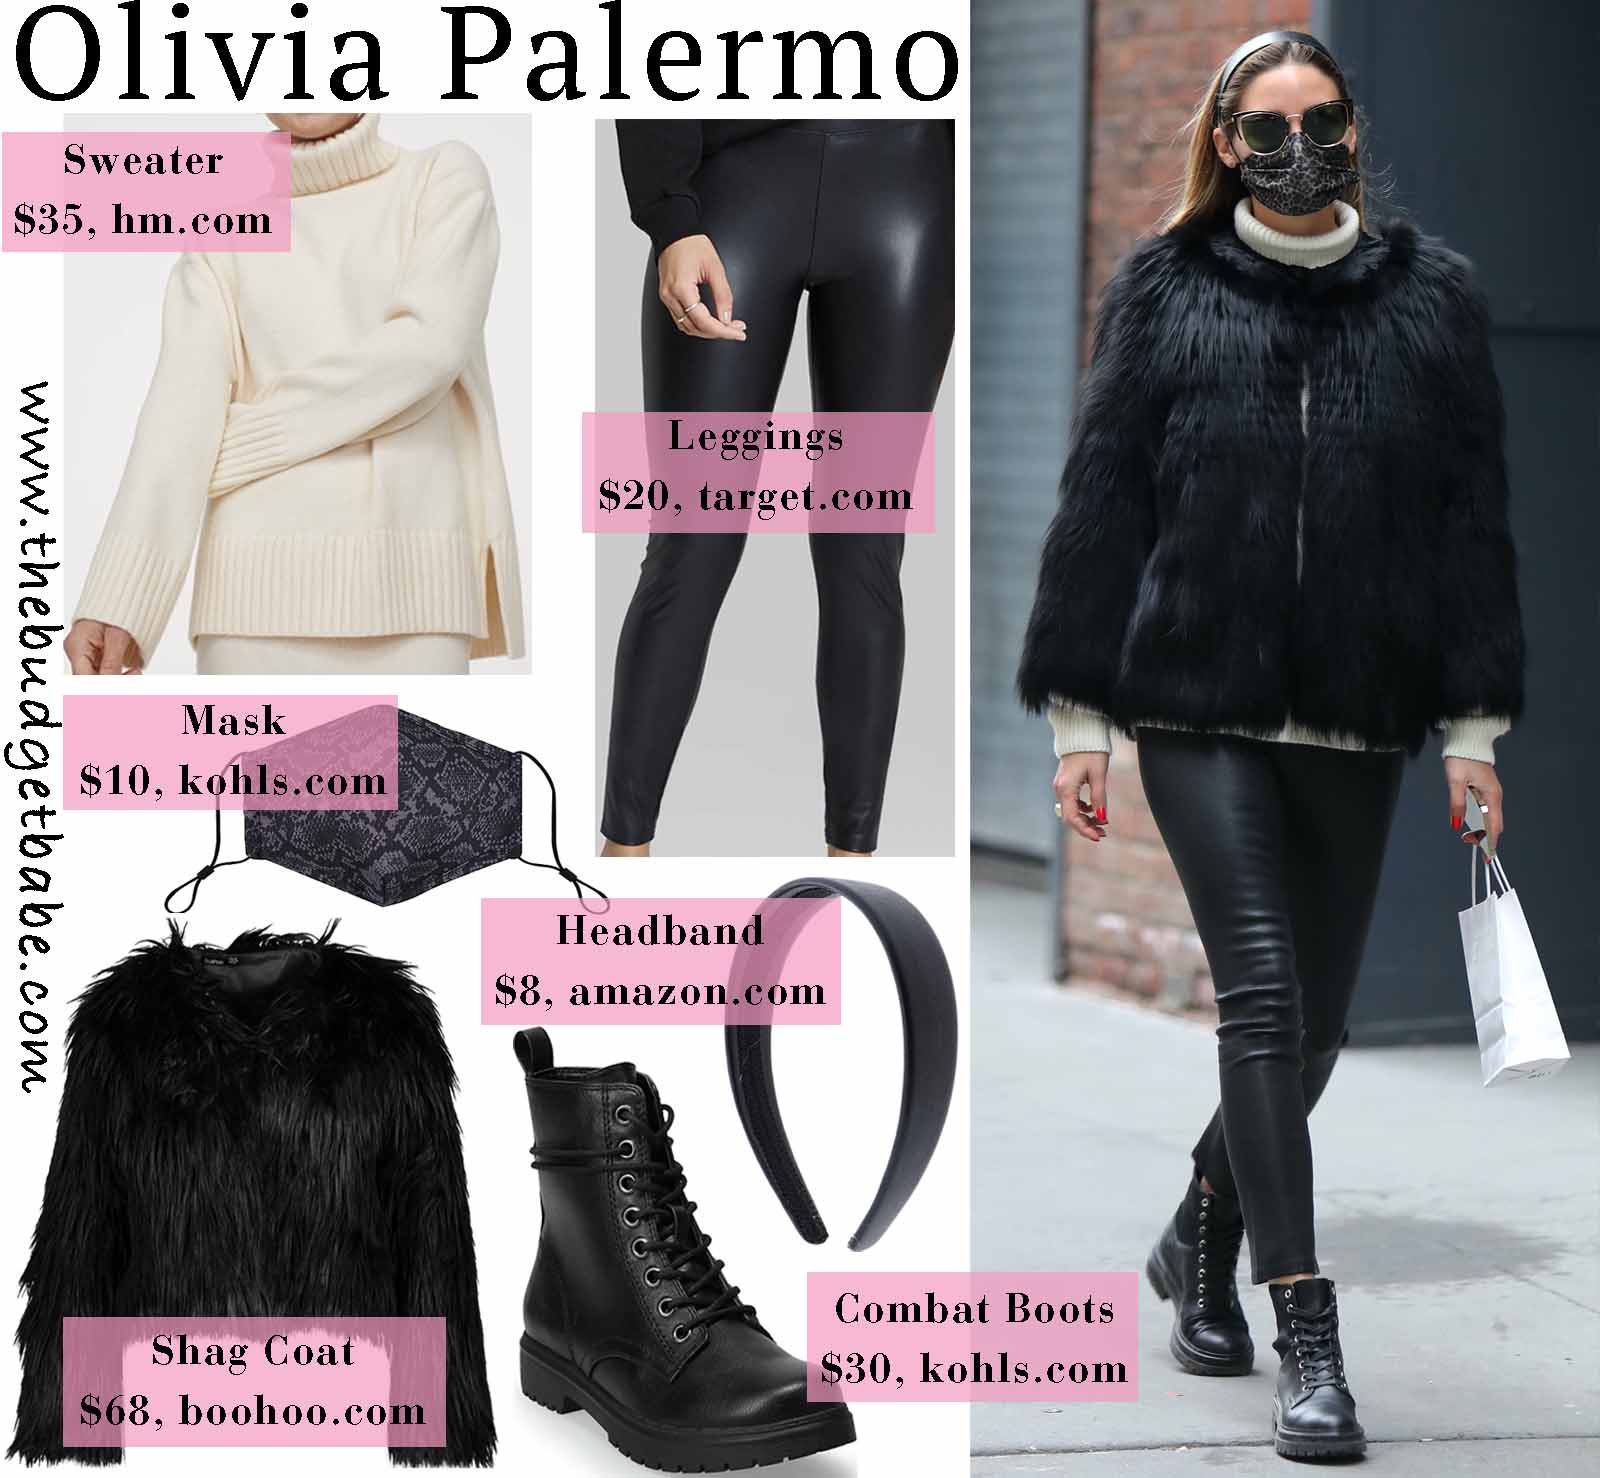 Olivia's shag fur coat is so chic!